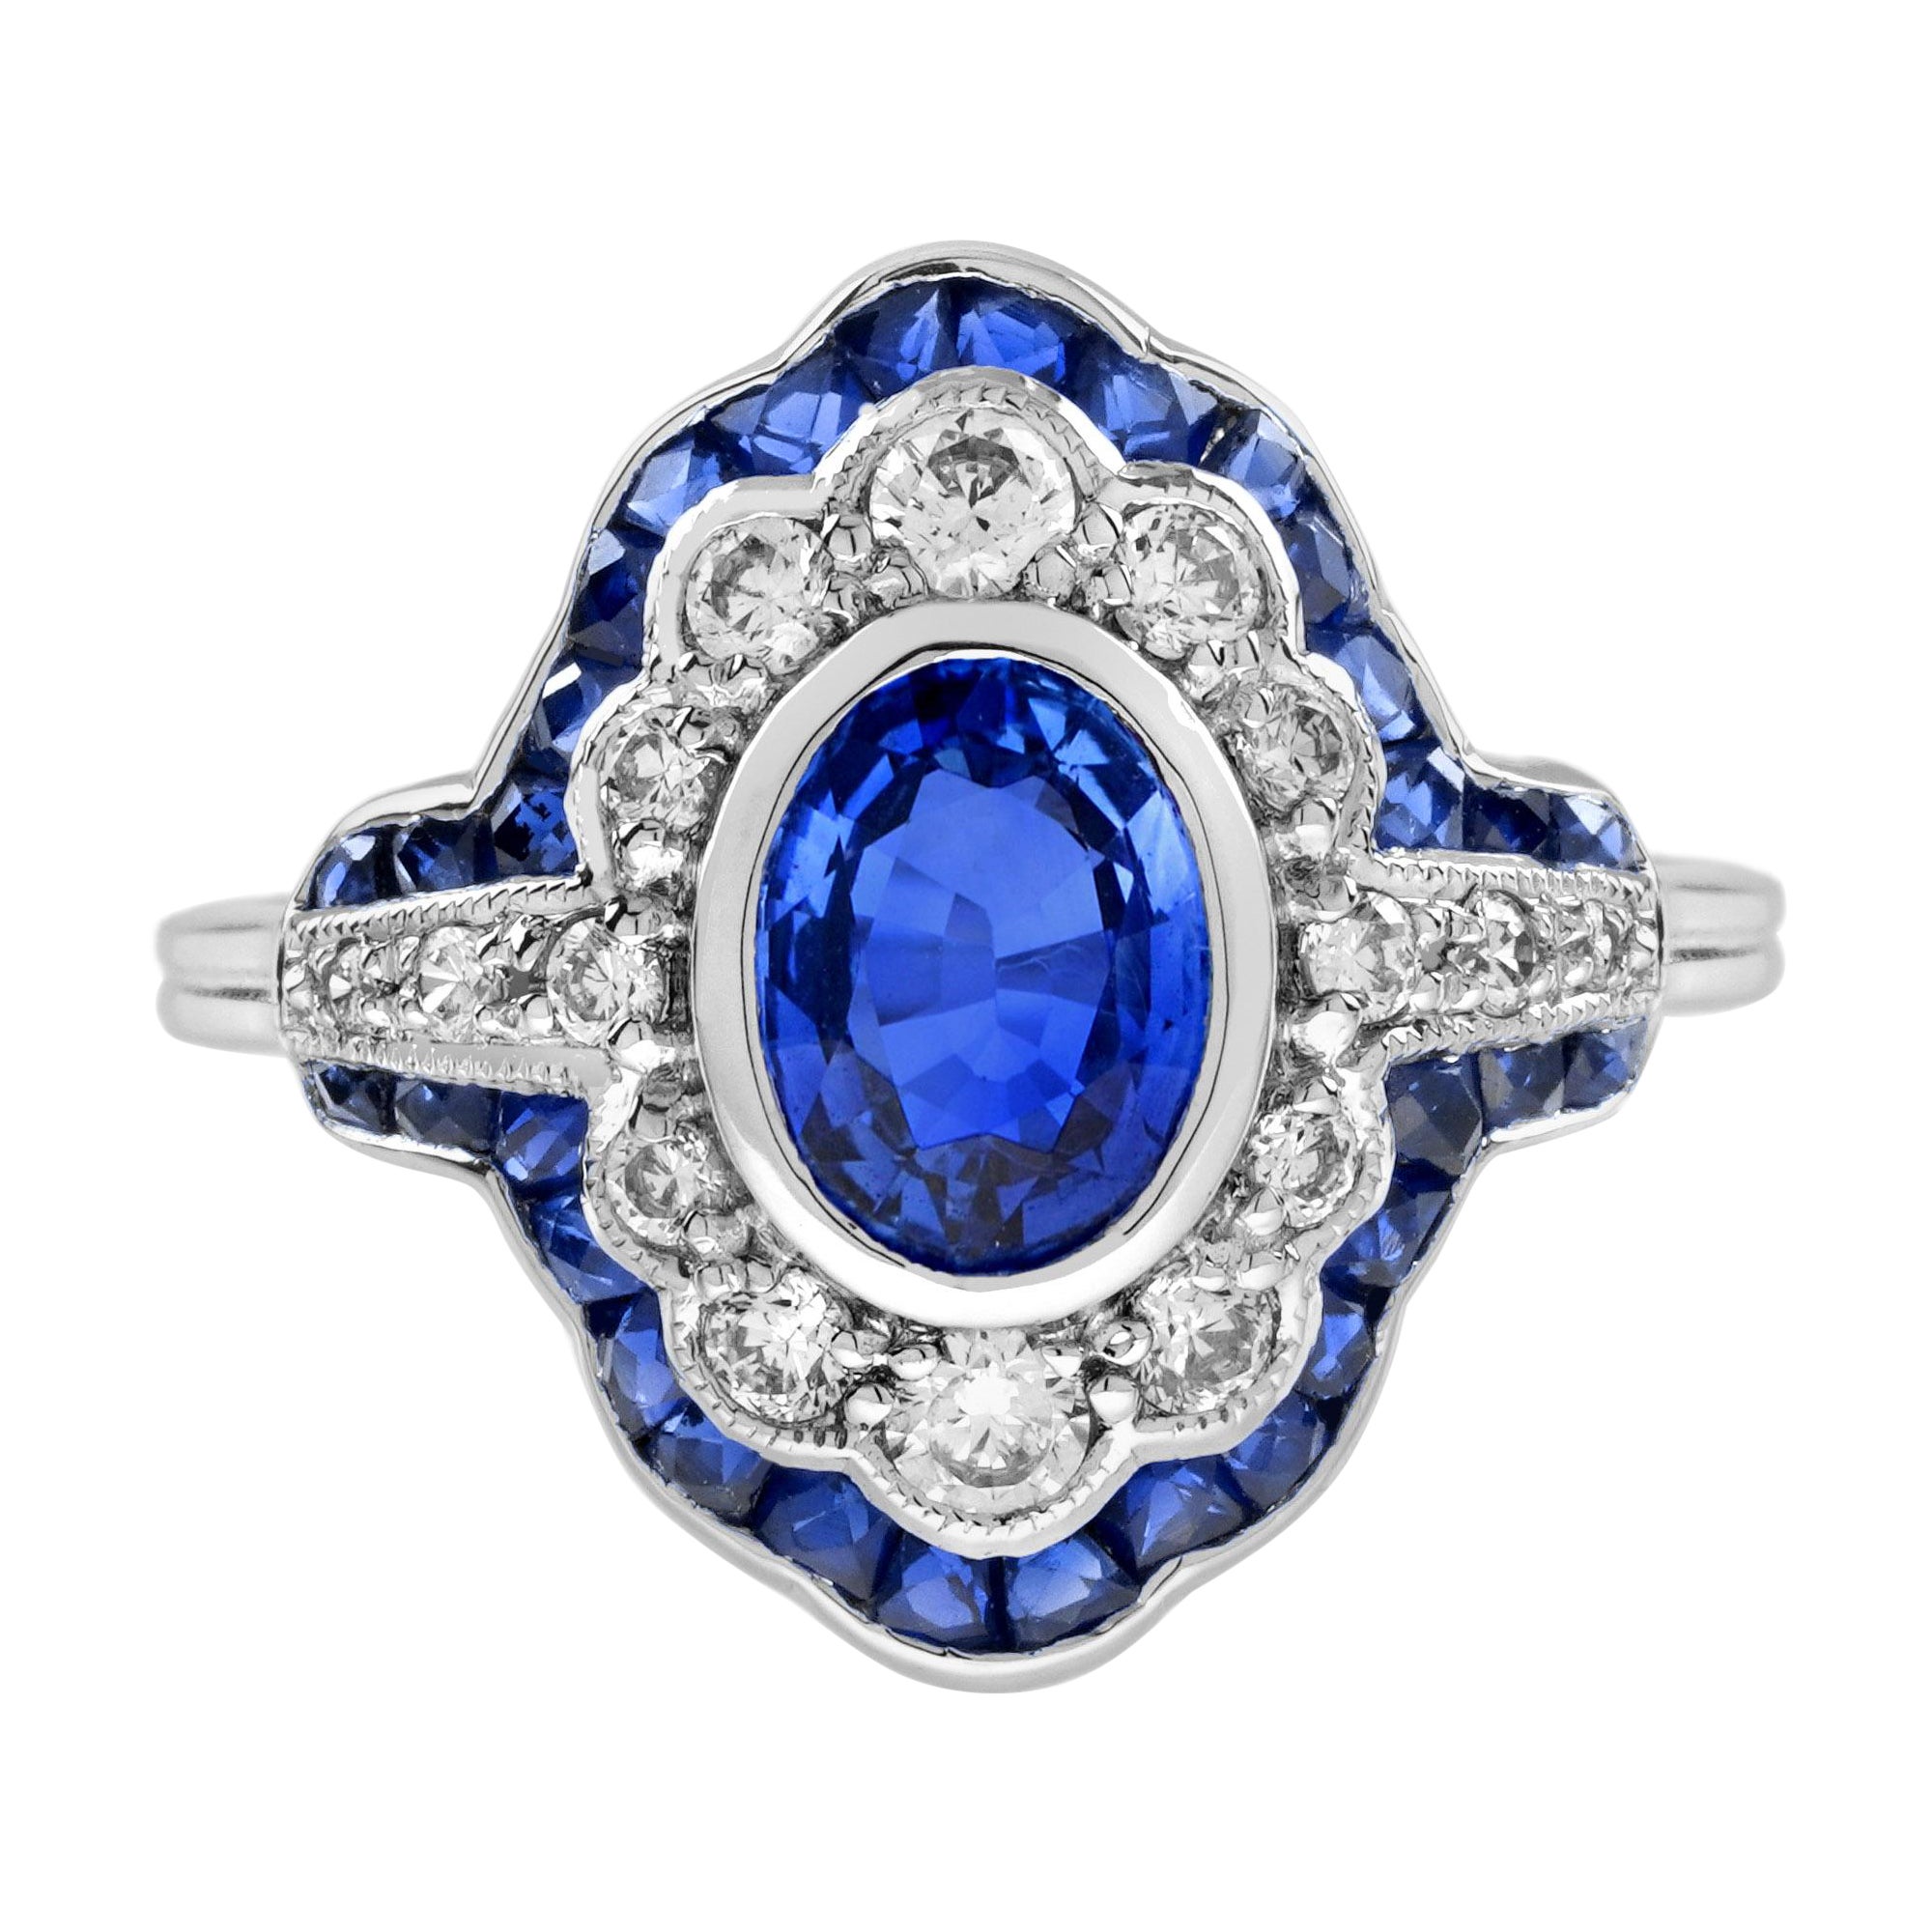 1.6 Ct. Ceylon Sapphire Diamond Art Deco Style Engagement Ring in 18K White Gold